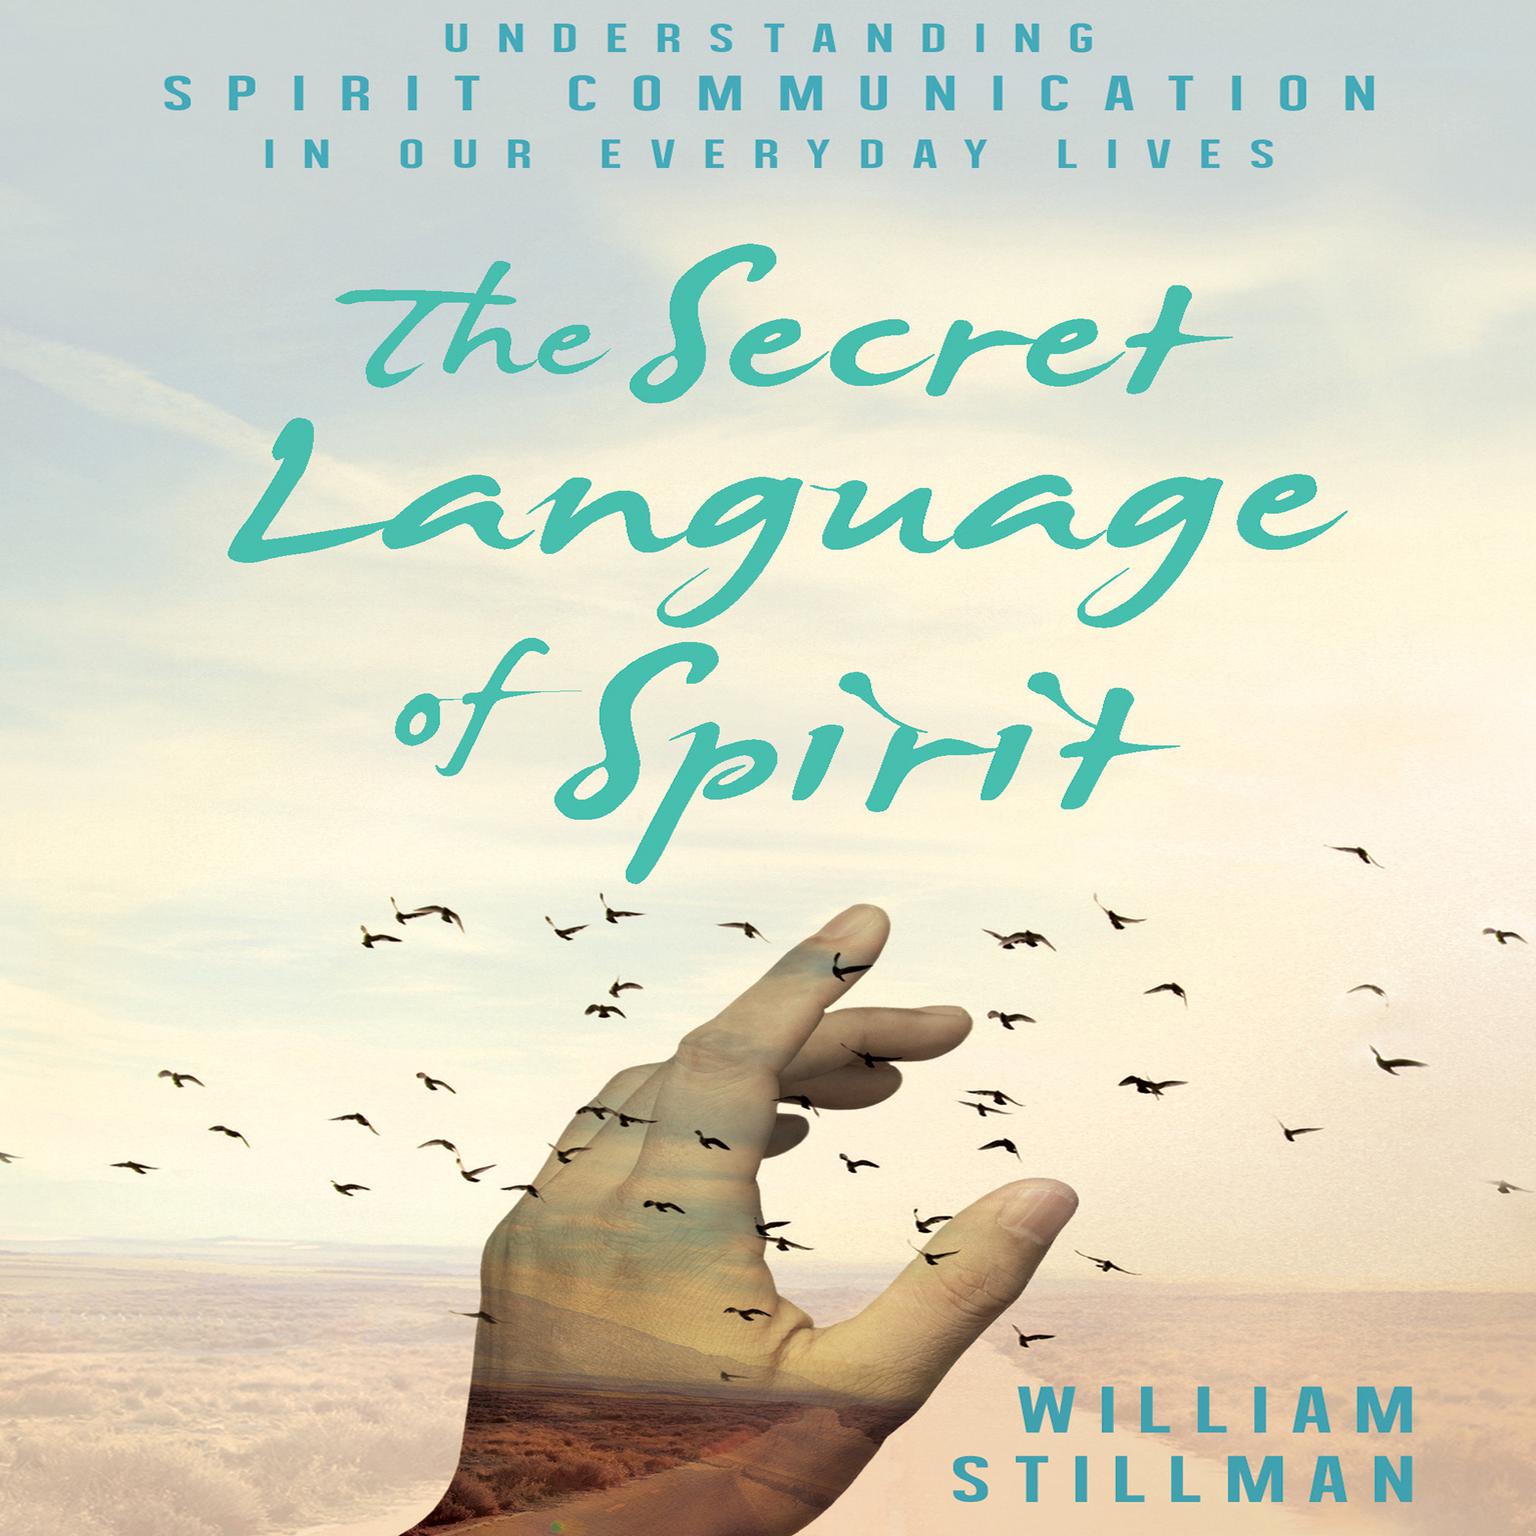 The Secret Language of Spirit: Understanding Spirit Communication in Our Everyday Lives Audiobook, by William Stillman